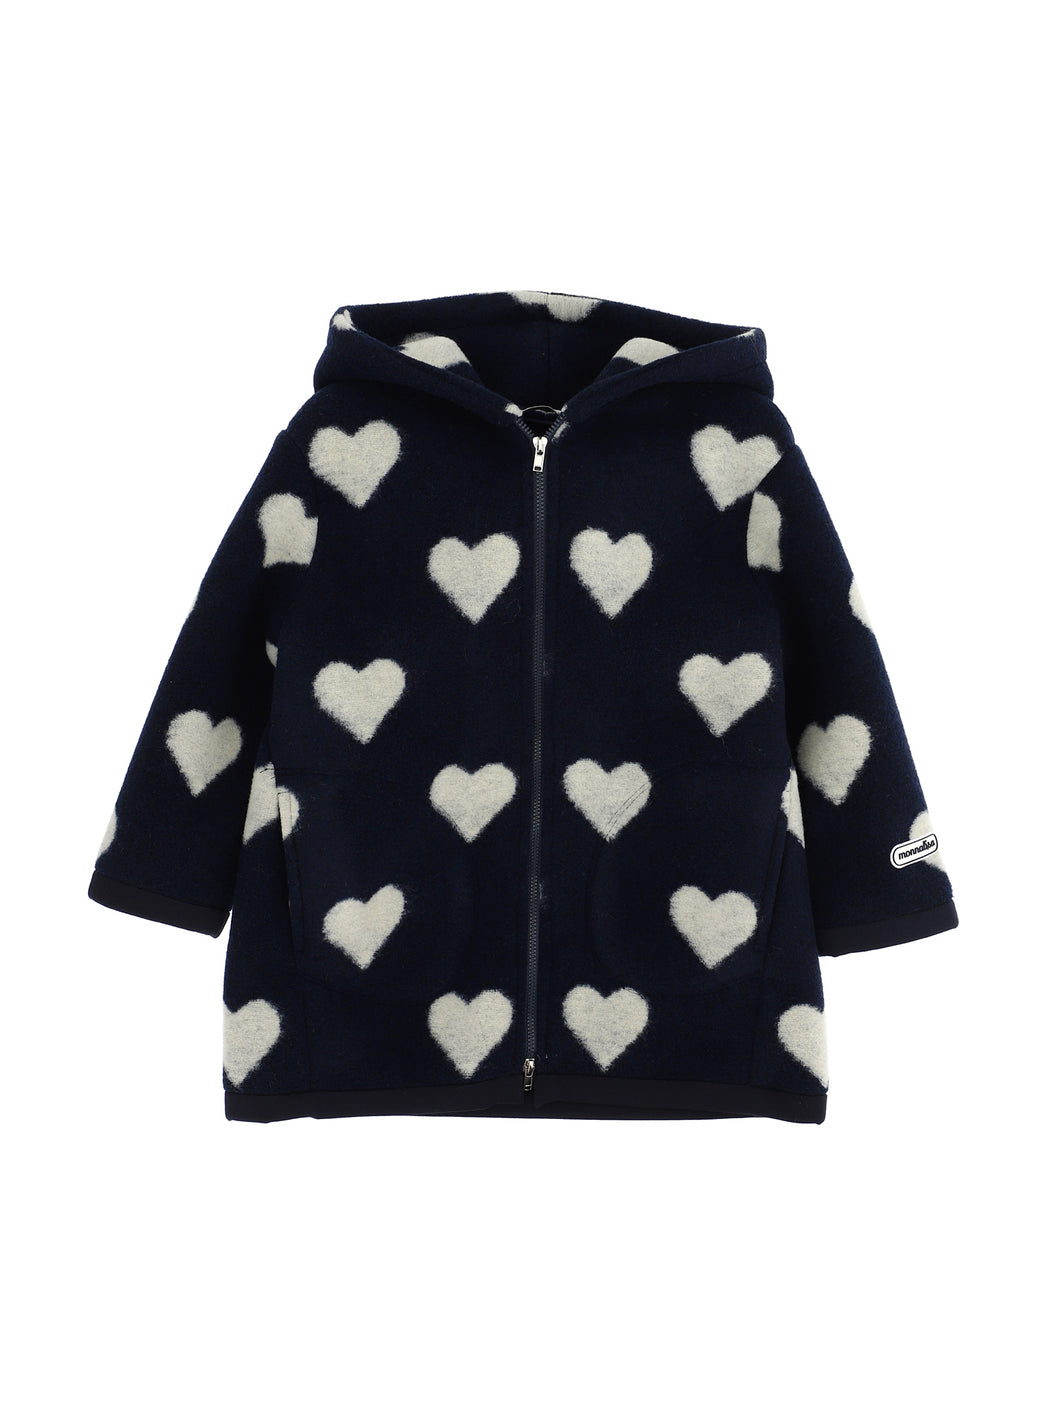 Hearts woollen jacket